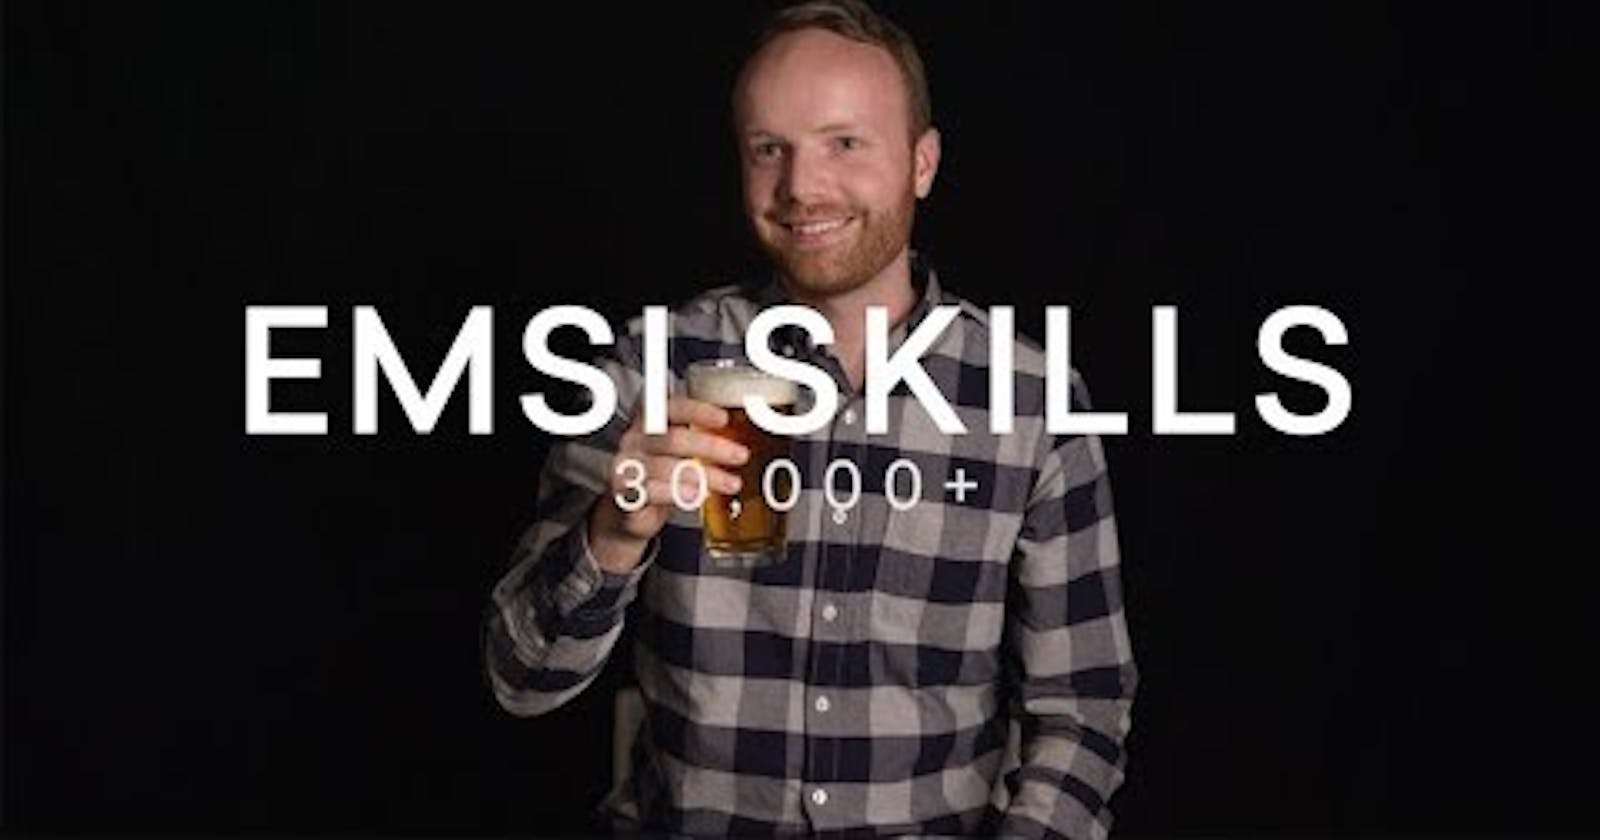 Beer with Emsi: Skills